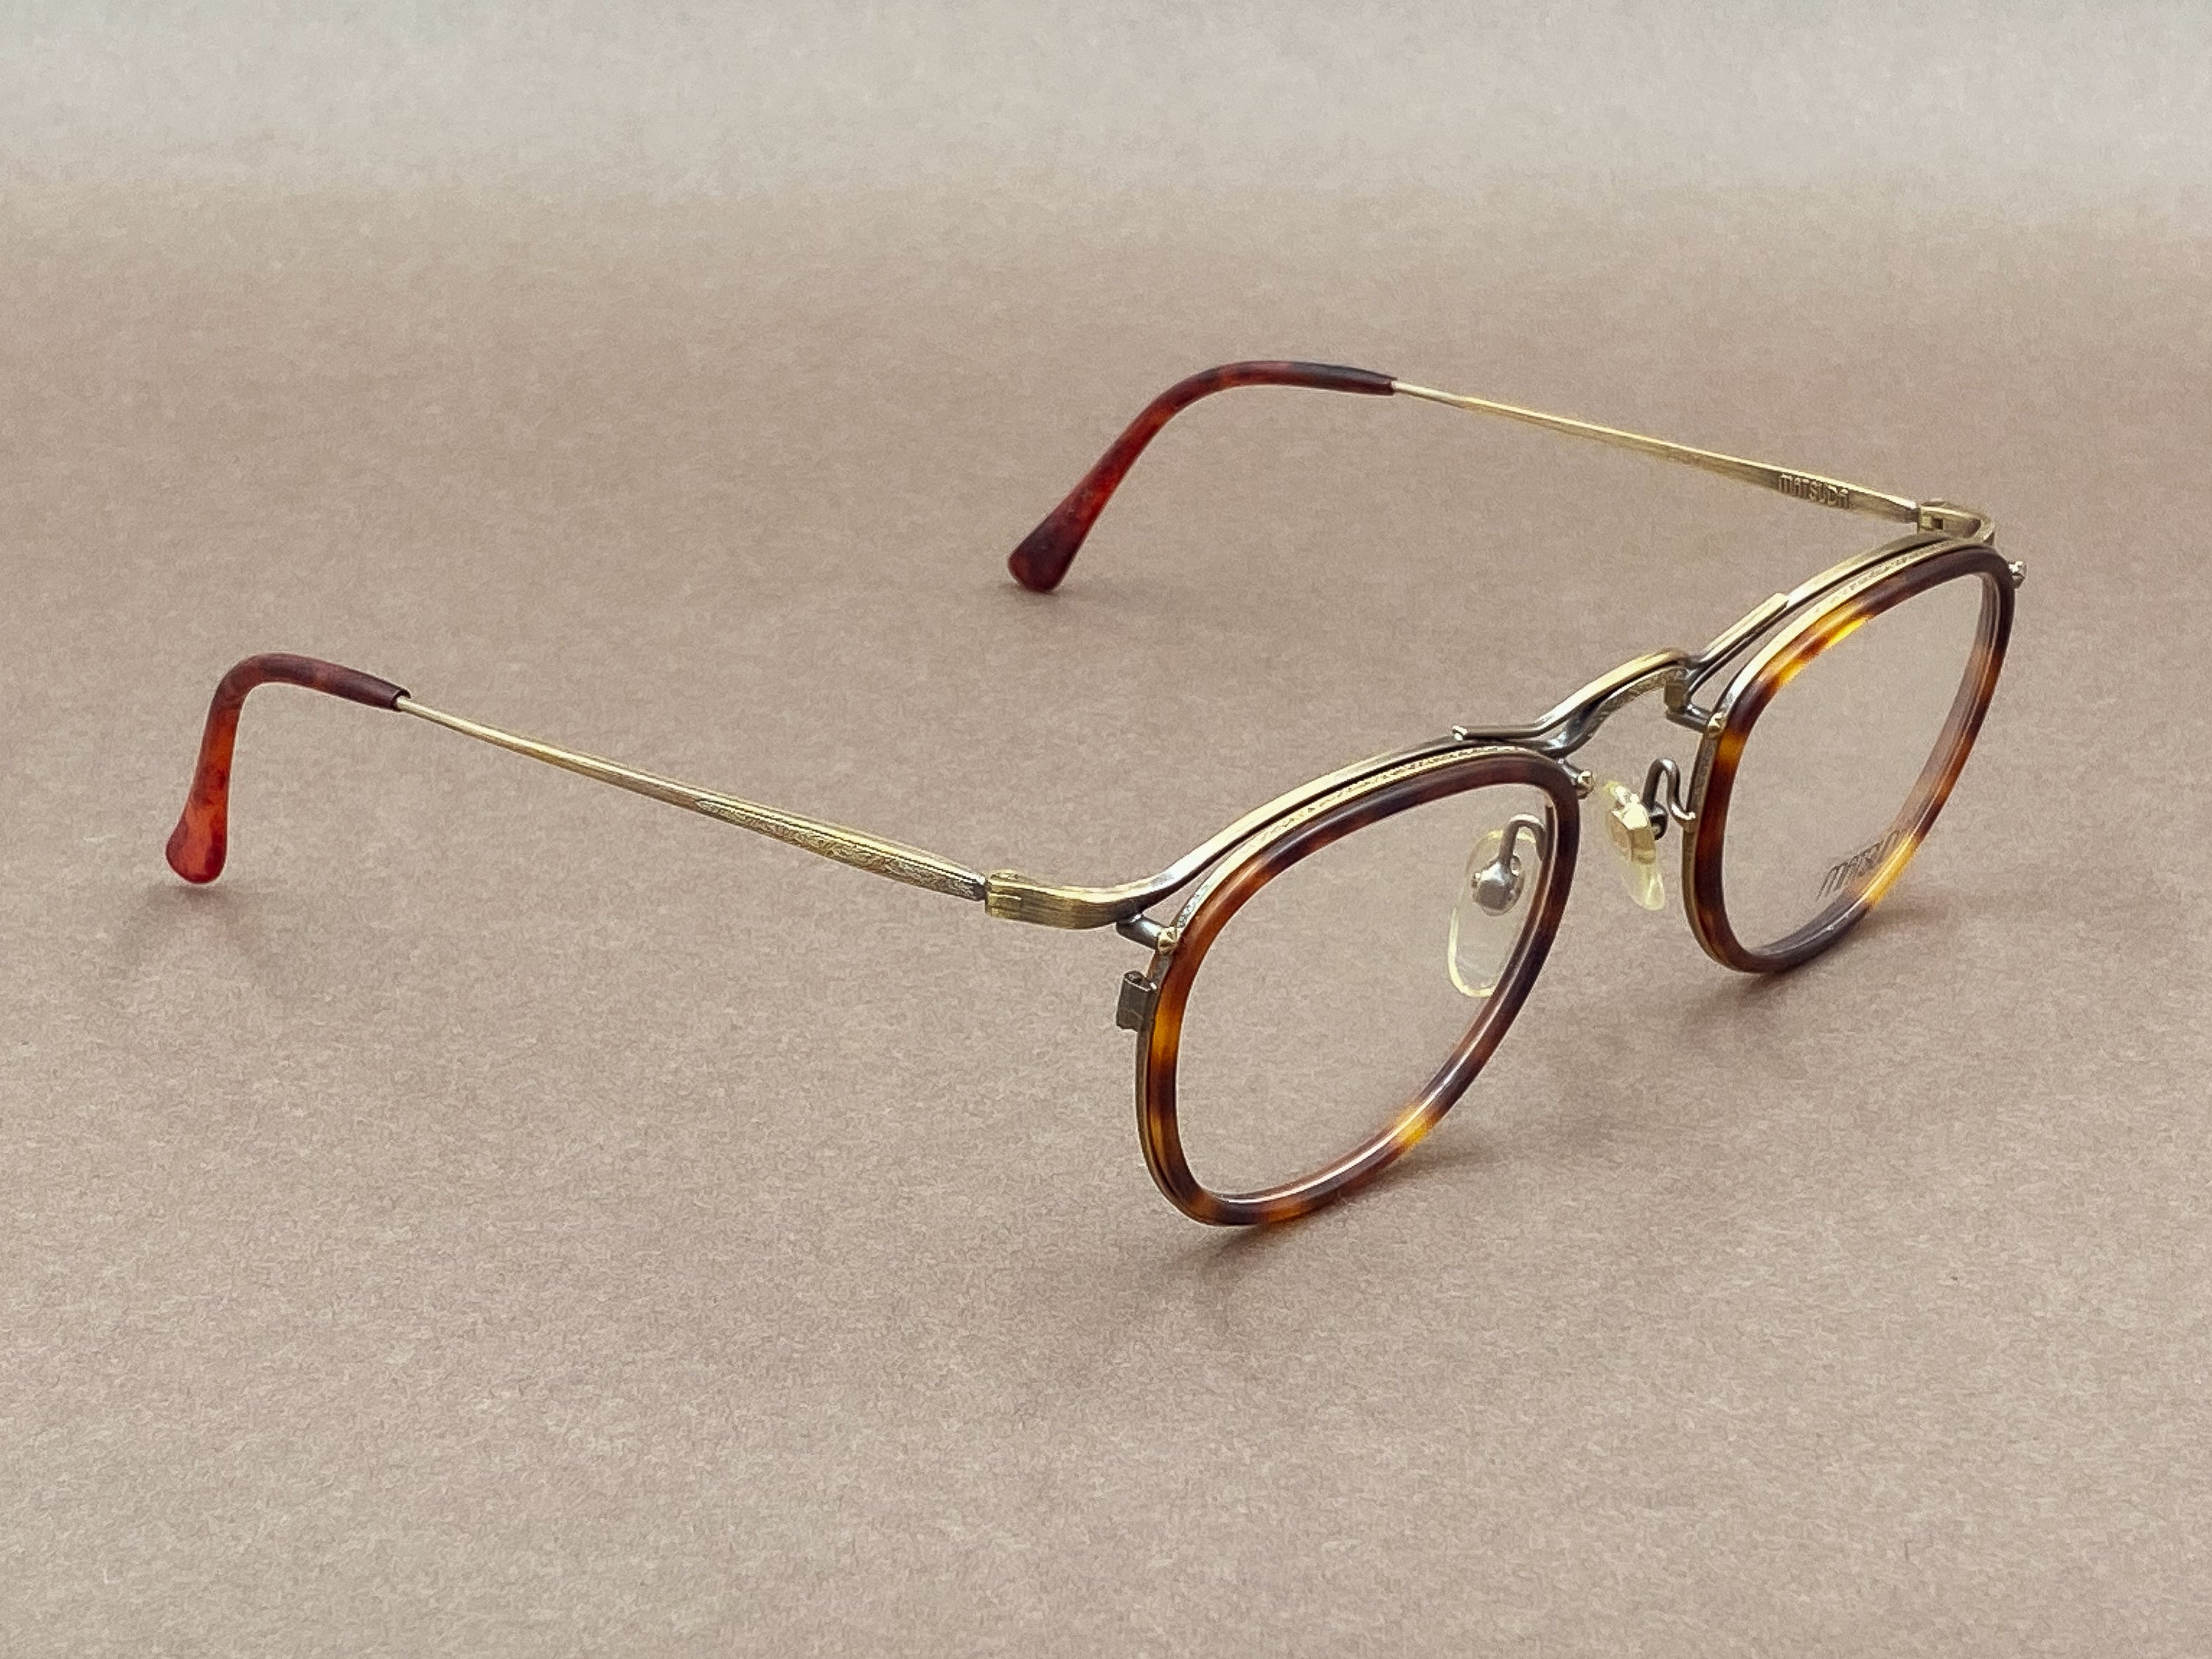 Matsuda 2817 eyeglasses